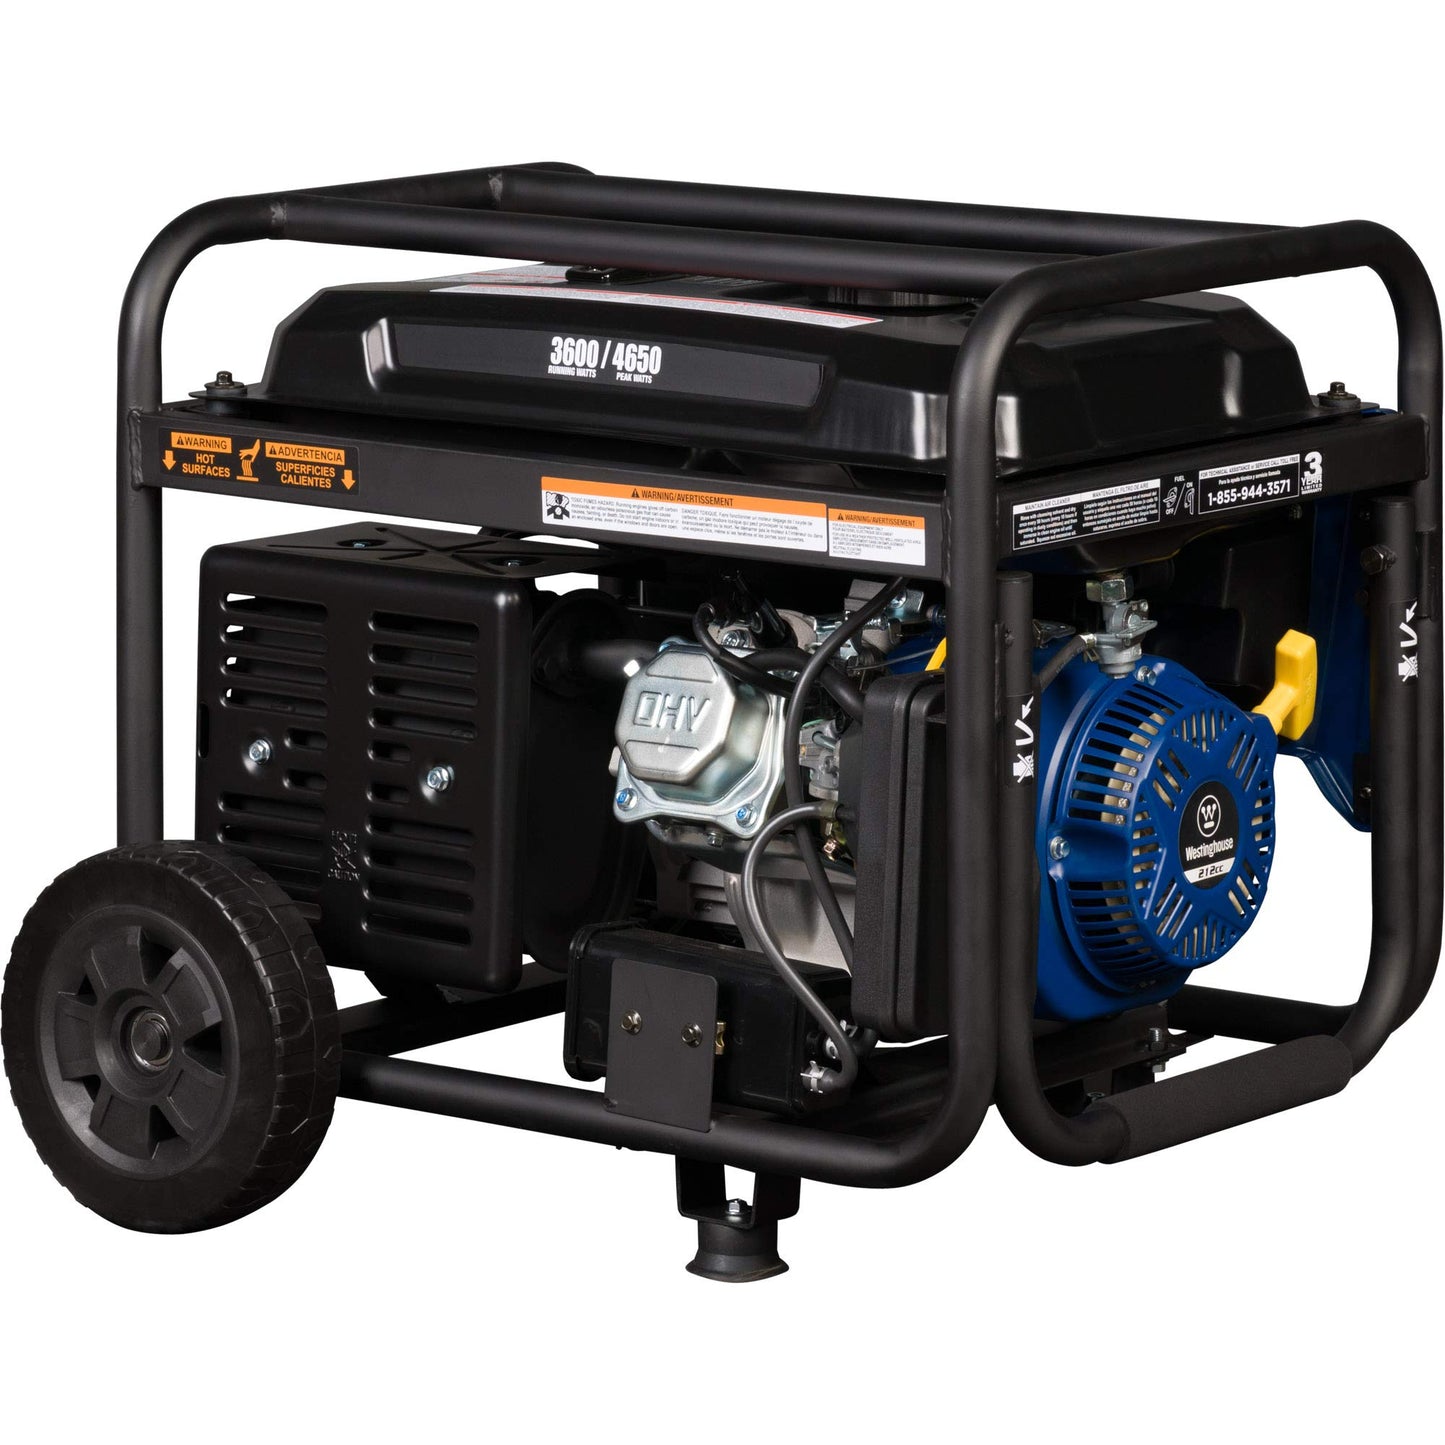 Westinghouse Outdoor Power Equipment 4650 Peak Watt Portable Generator with Wheel Kit